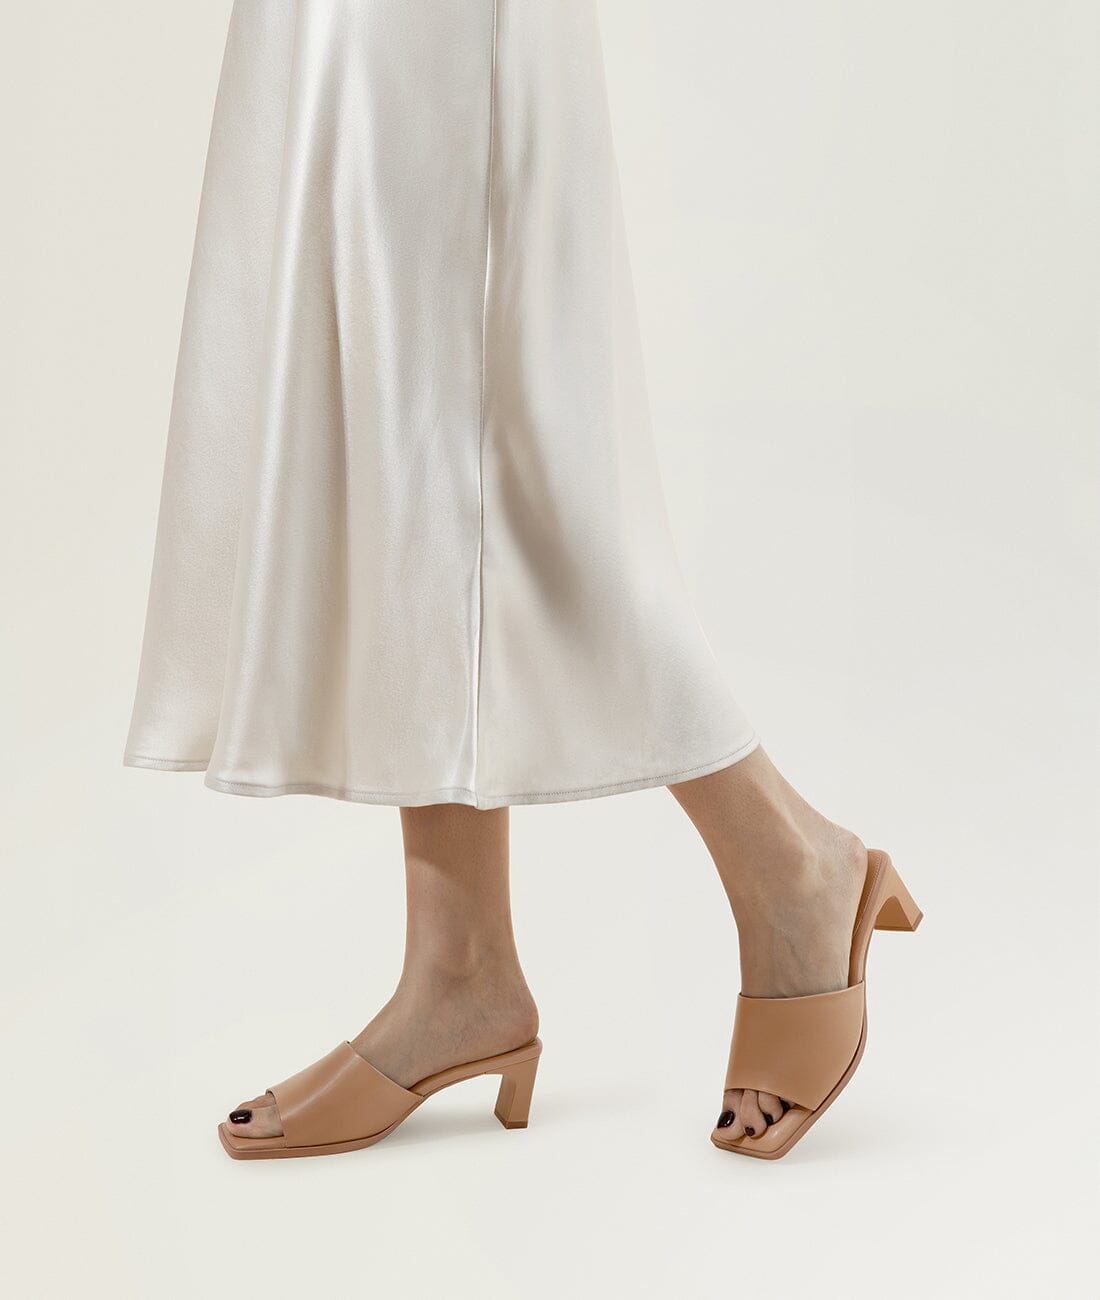 Brown slide sandals with heels